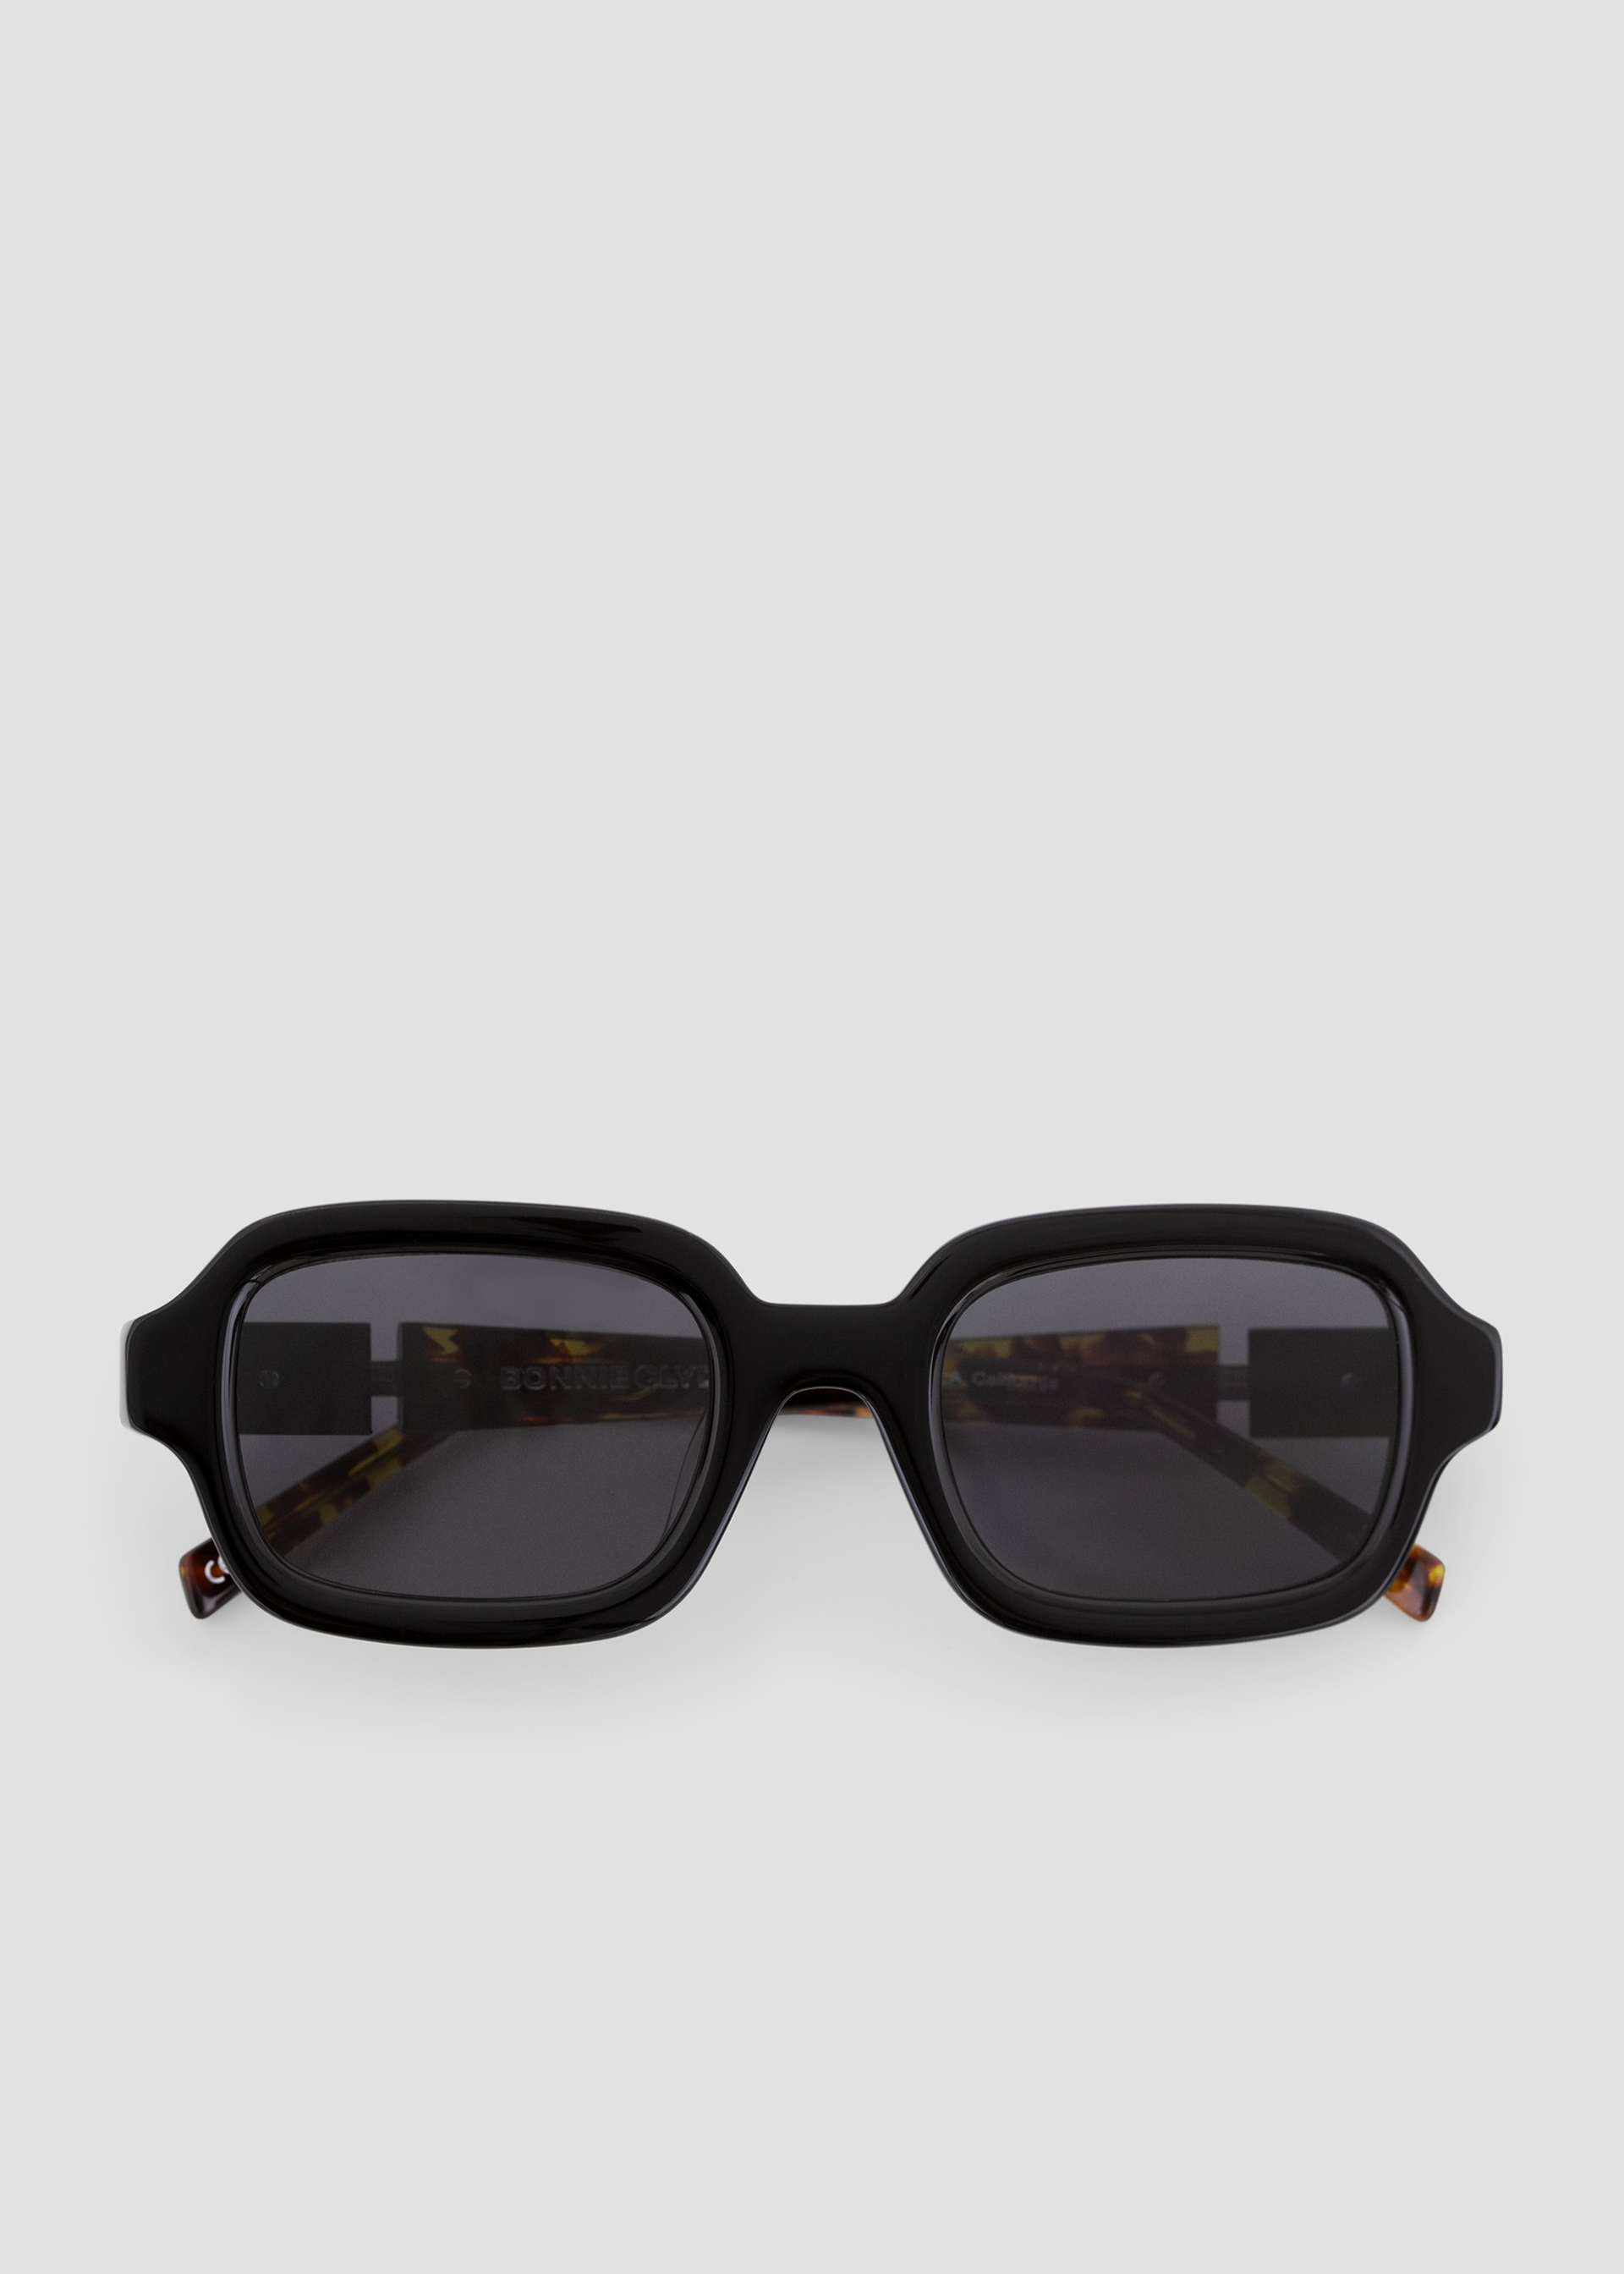 New Wave Square-Frame Tortoiseshell Acetate Sunglasses